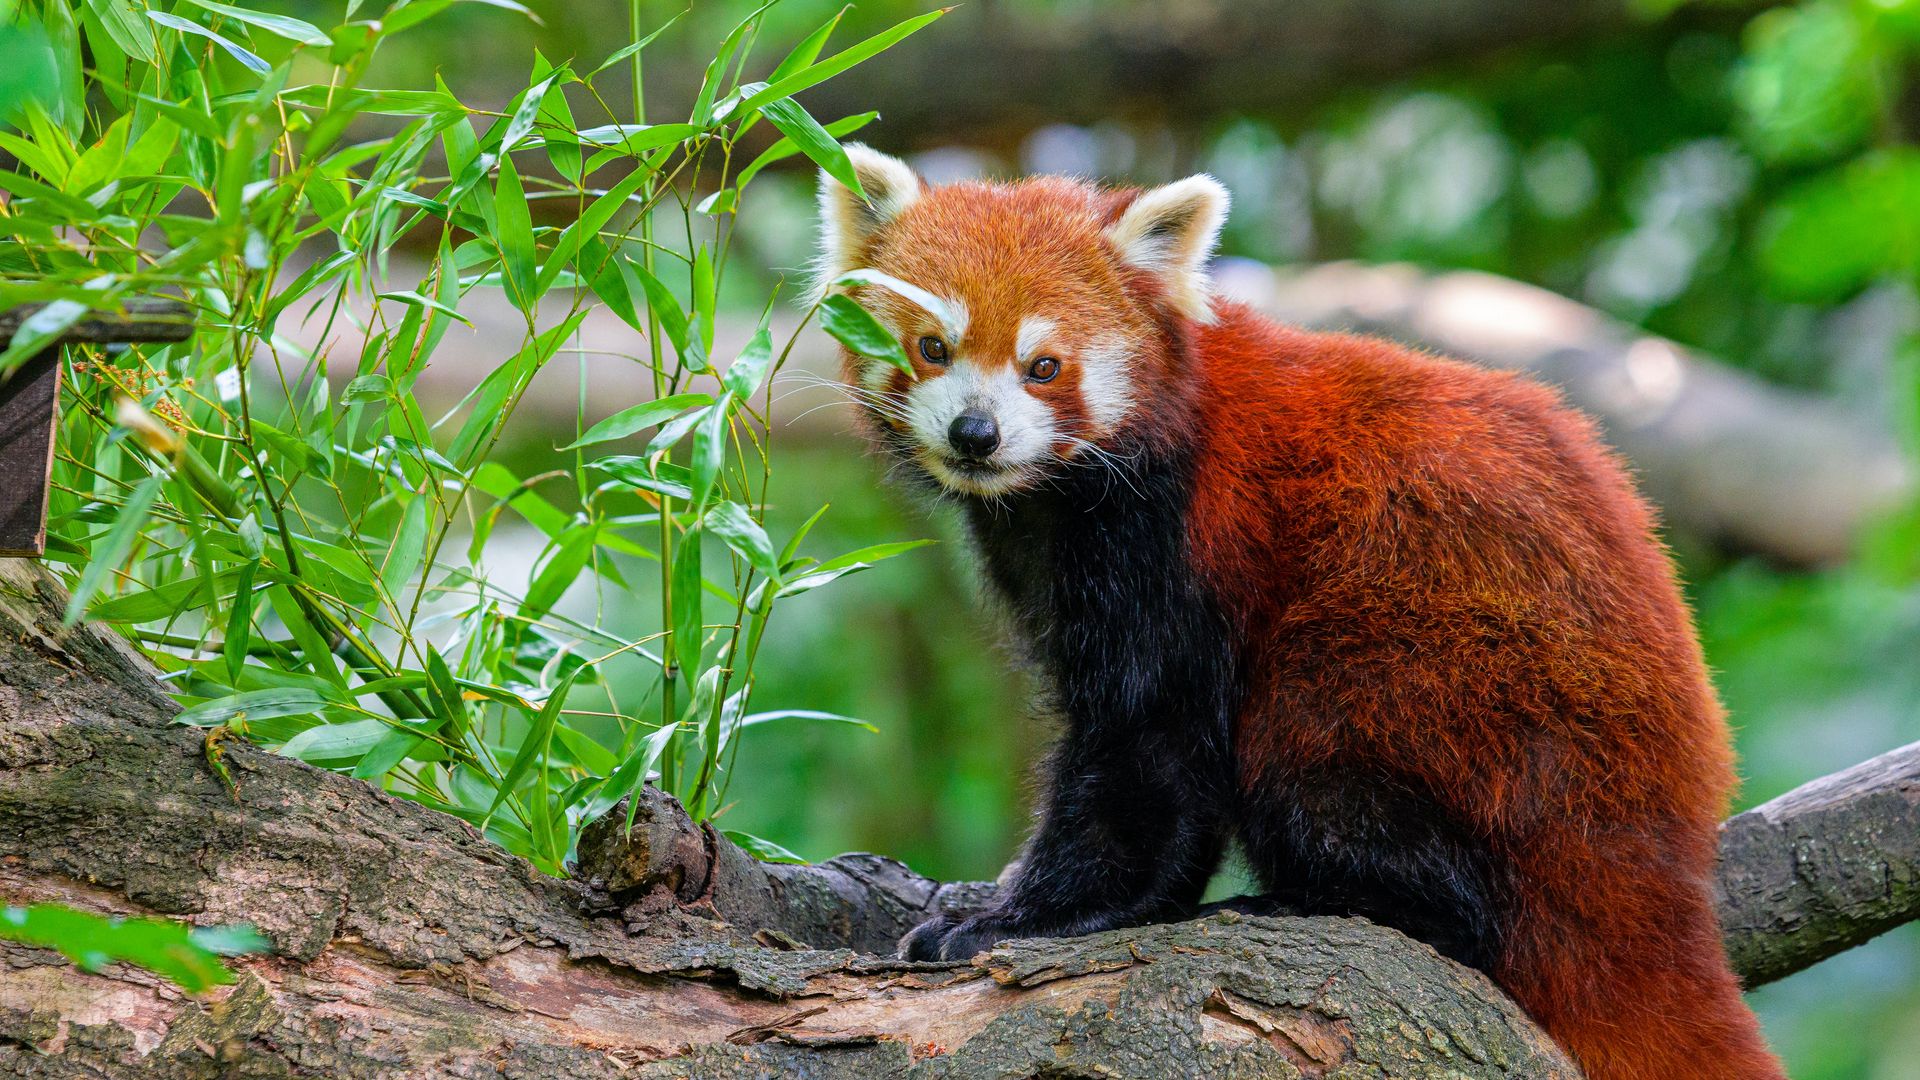 Download wallpaper 1920x1080 red panda, tree, leaves, wildlife full hd ...